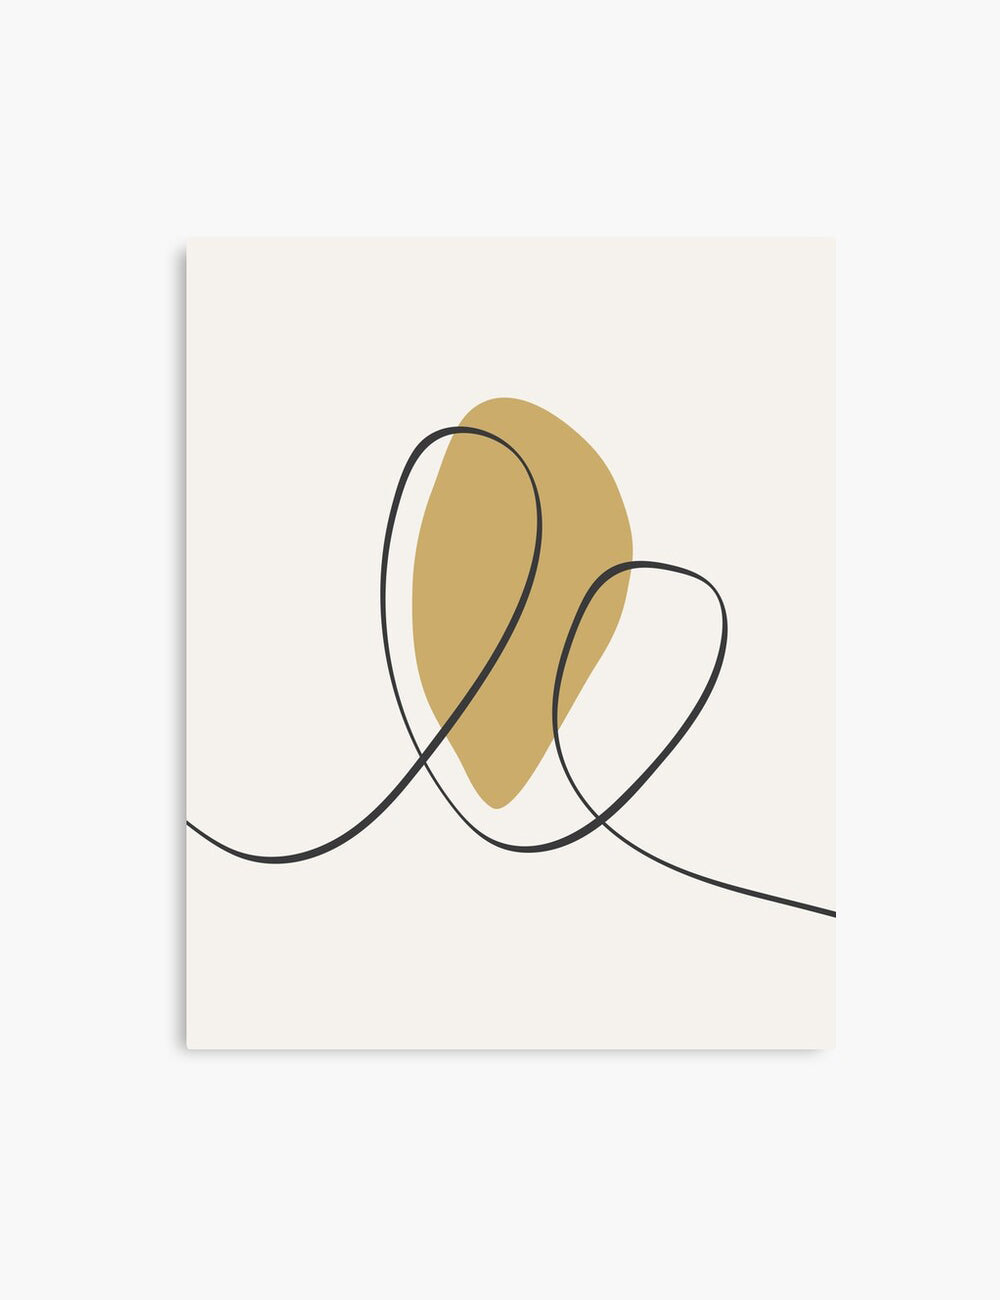 MINIMAL LINE ART. Abstract Heart Shape. Boho Aesthetic. Yellow Gold. Beige. Black. Printable Wall Art Illustration. - PAPER MOON Art & Design